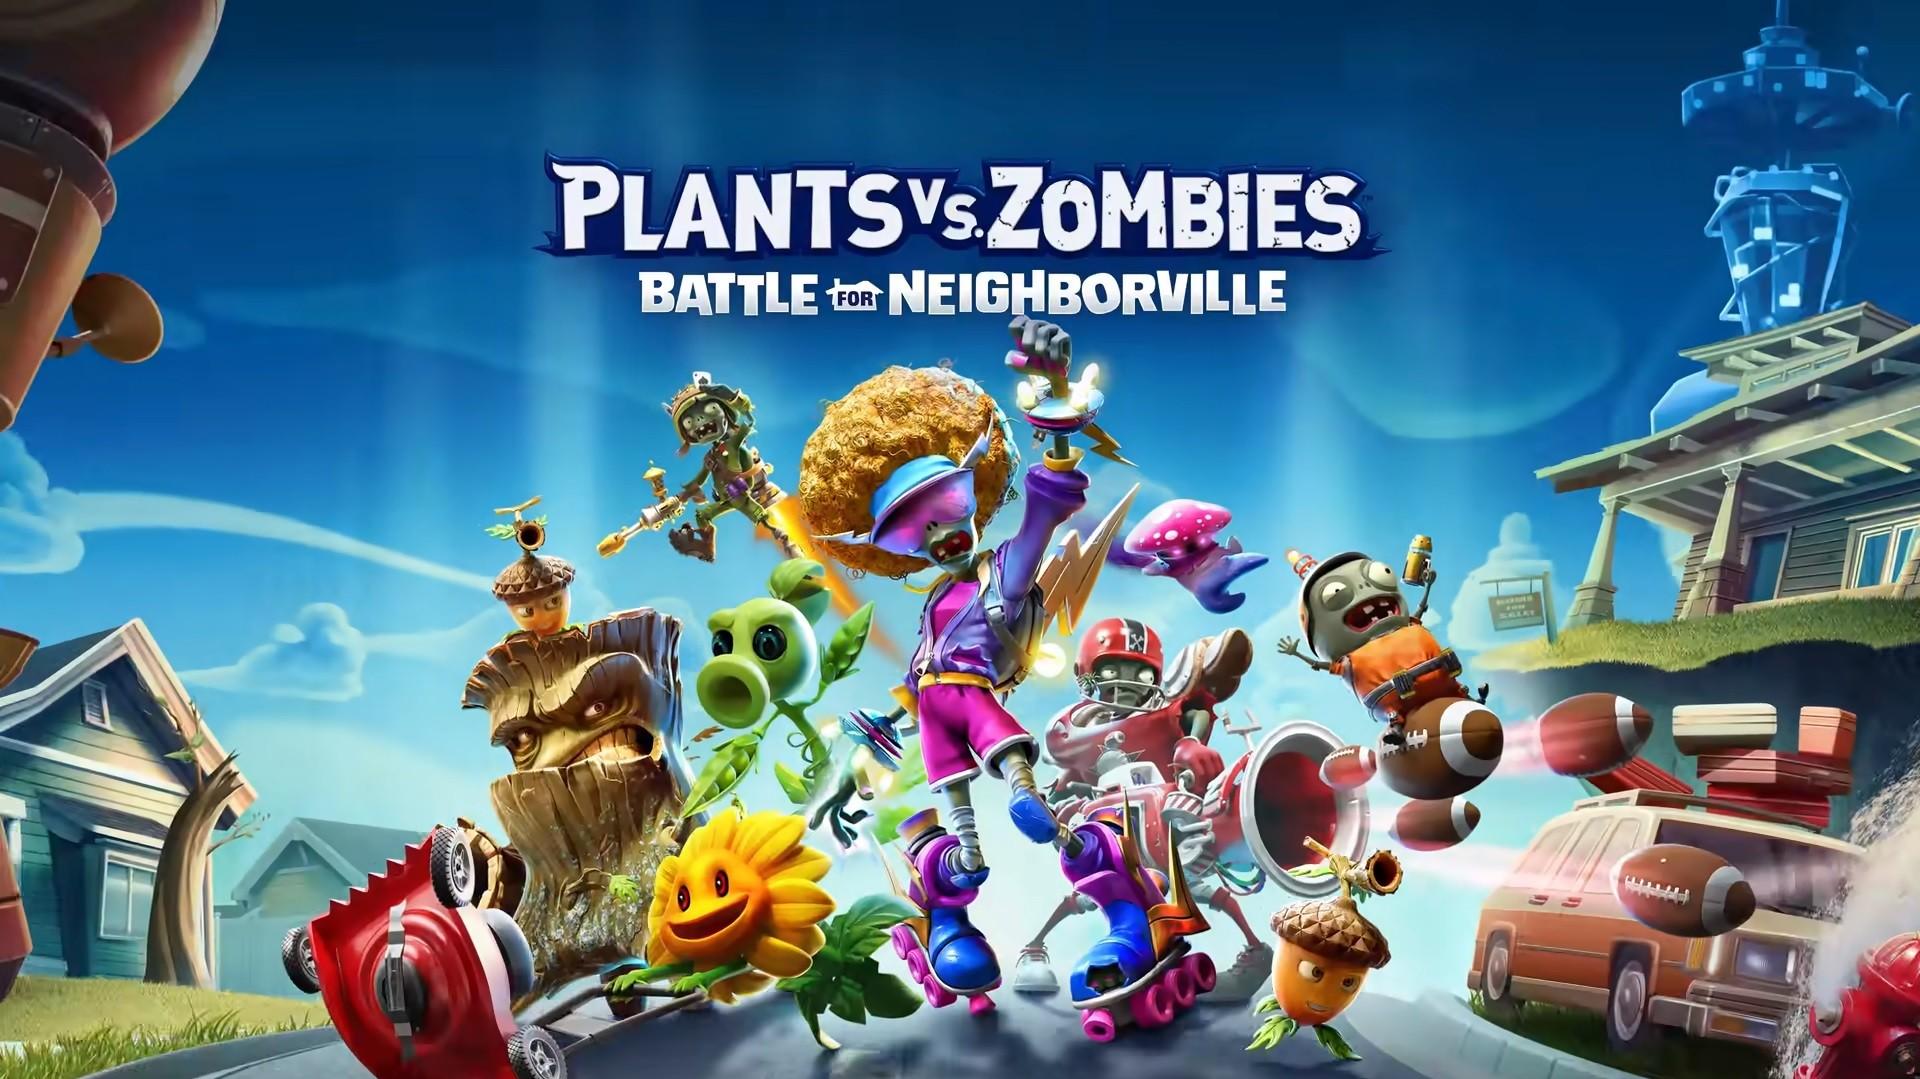 Gamefly lists Plants Vs Zombies Battle for Neighborville